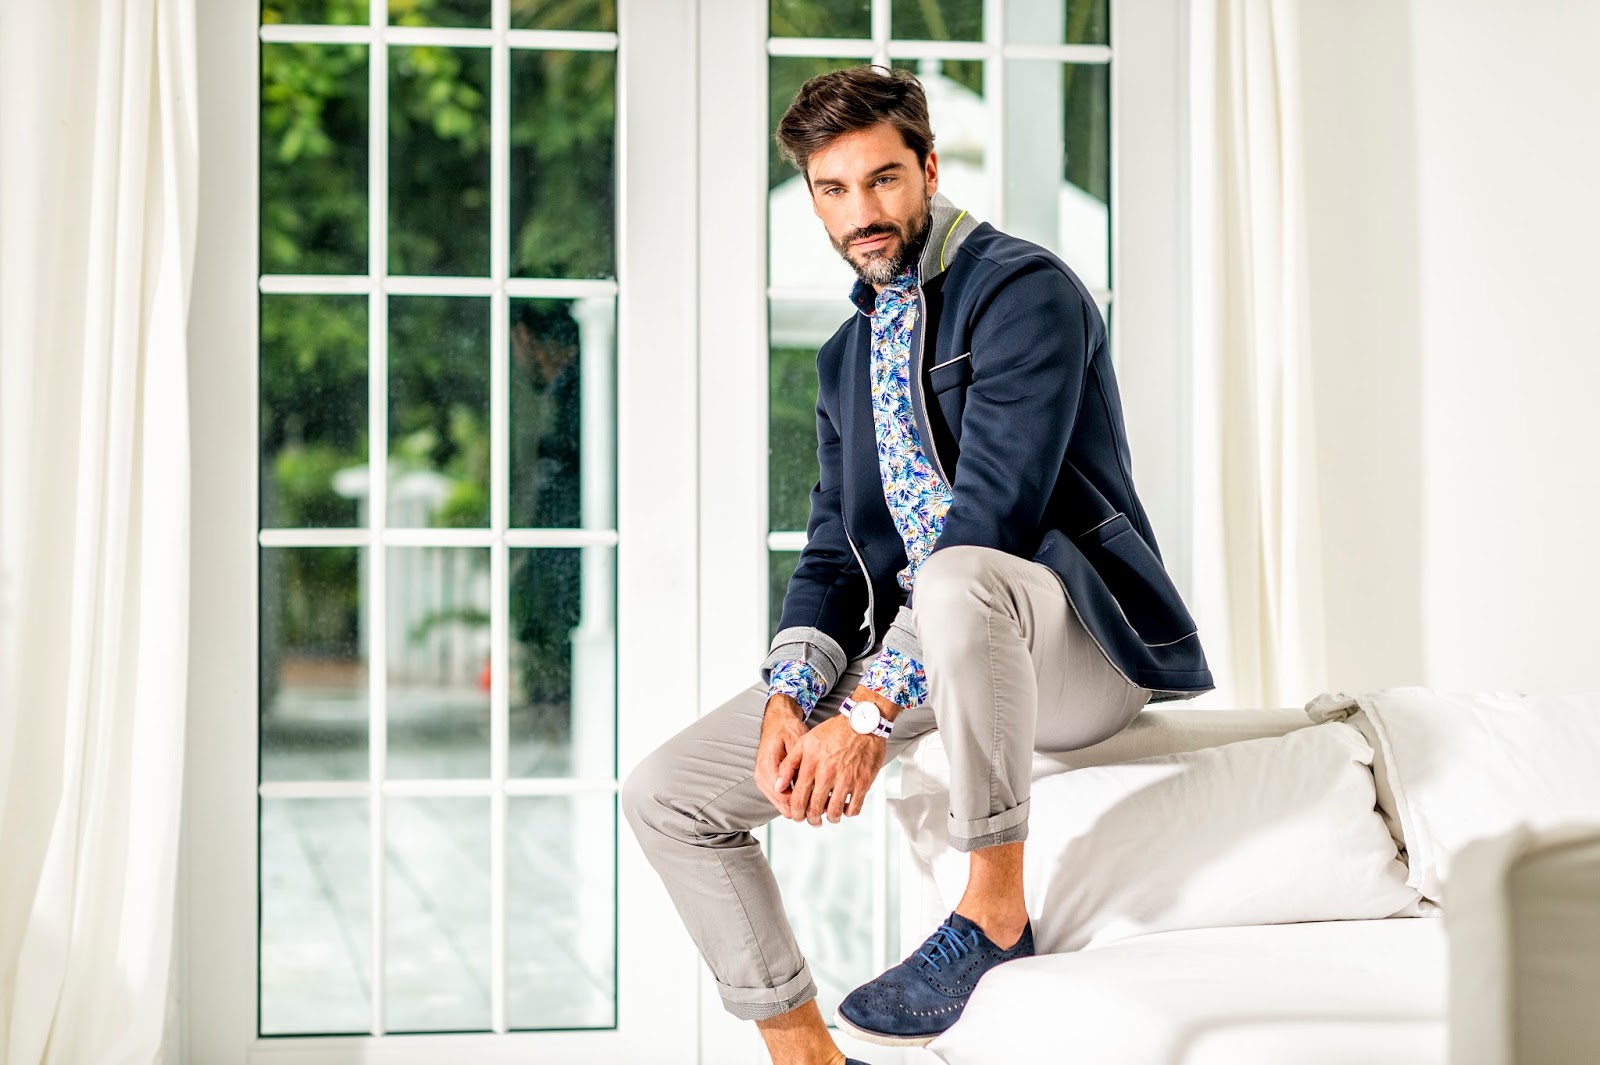 Men's Fashion - European fashion trends - Designer clothing for men